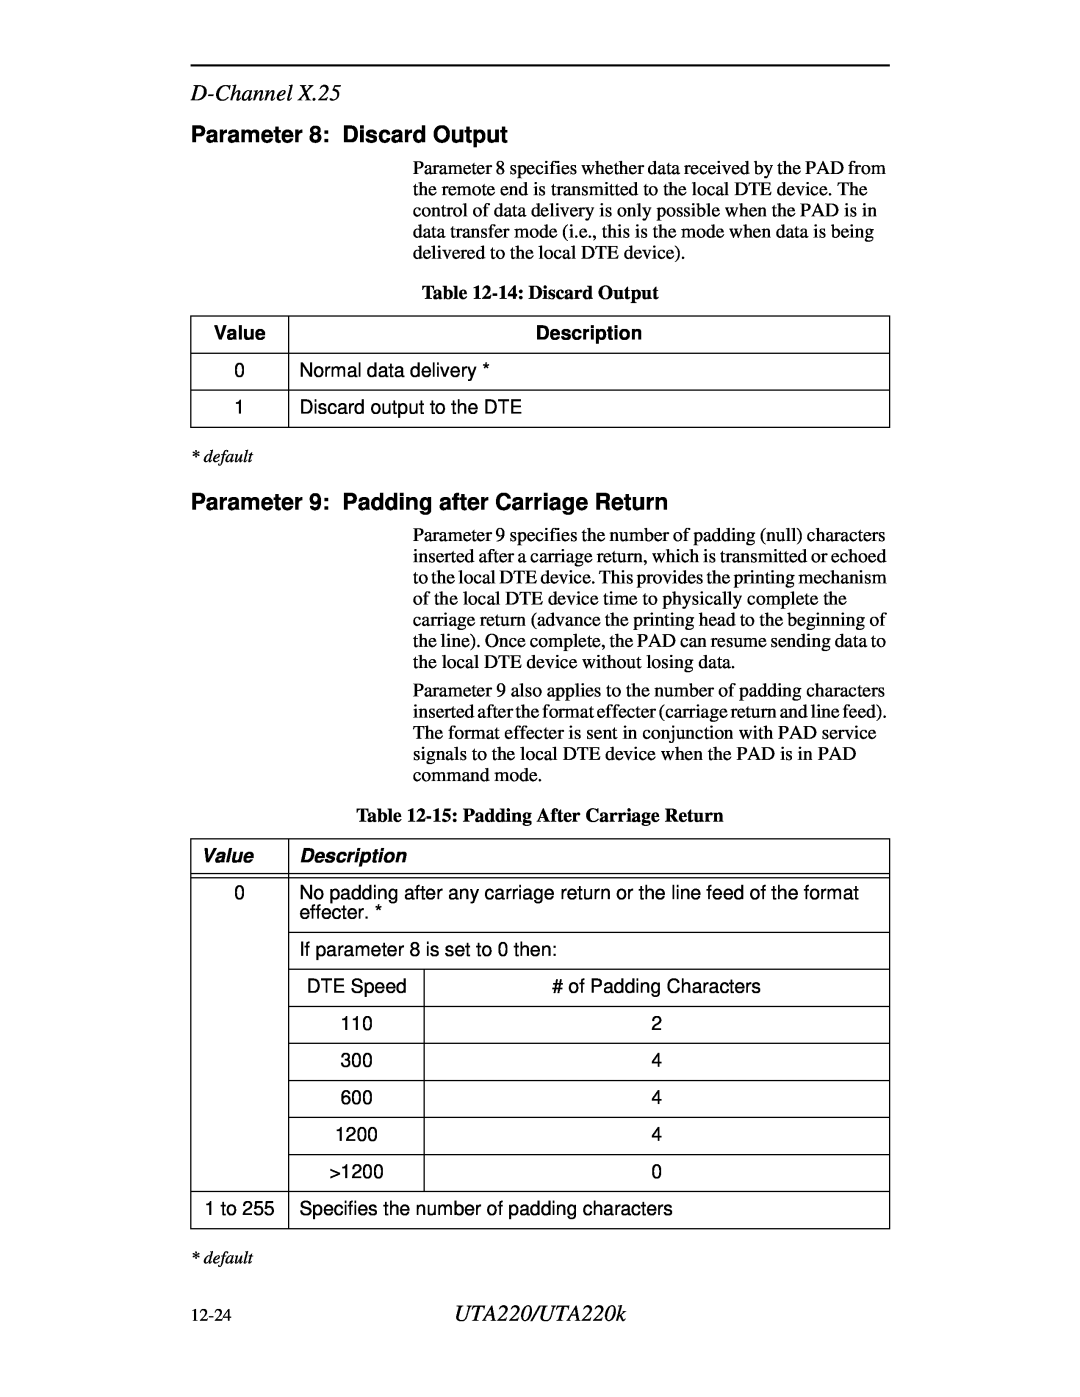 Northern UTA220/UTA220k manual Parameter 8 Discard Output, Parameter 9 Padding after Carriage Return, Value, Description 